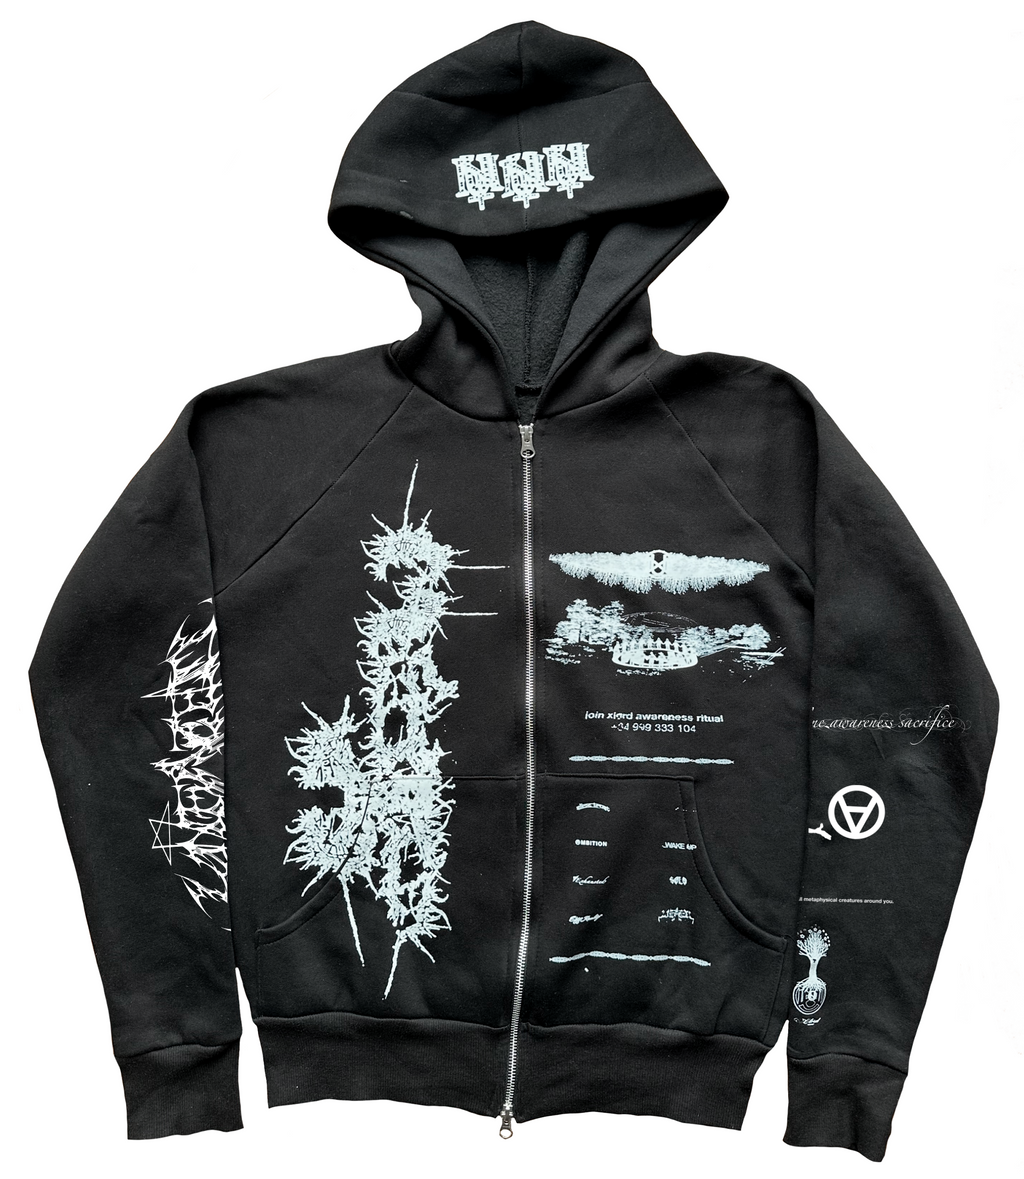 Unfzd_ybwtimeline 1st awareness sacrifice. designer zip hoodie (black)